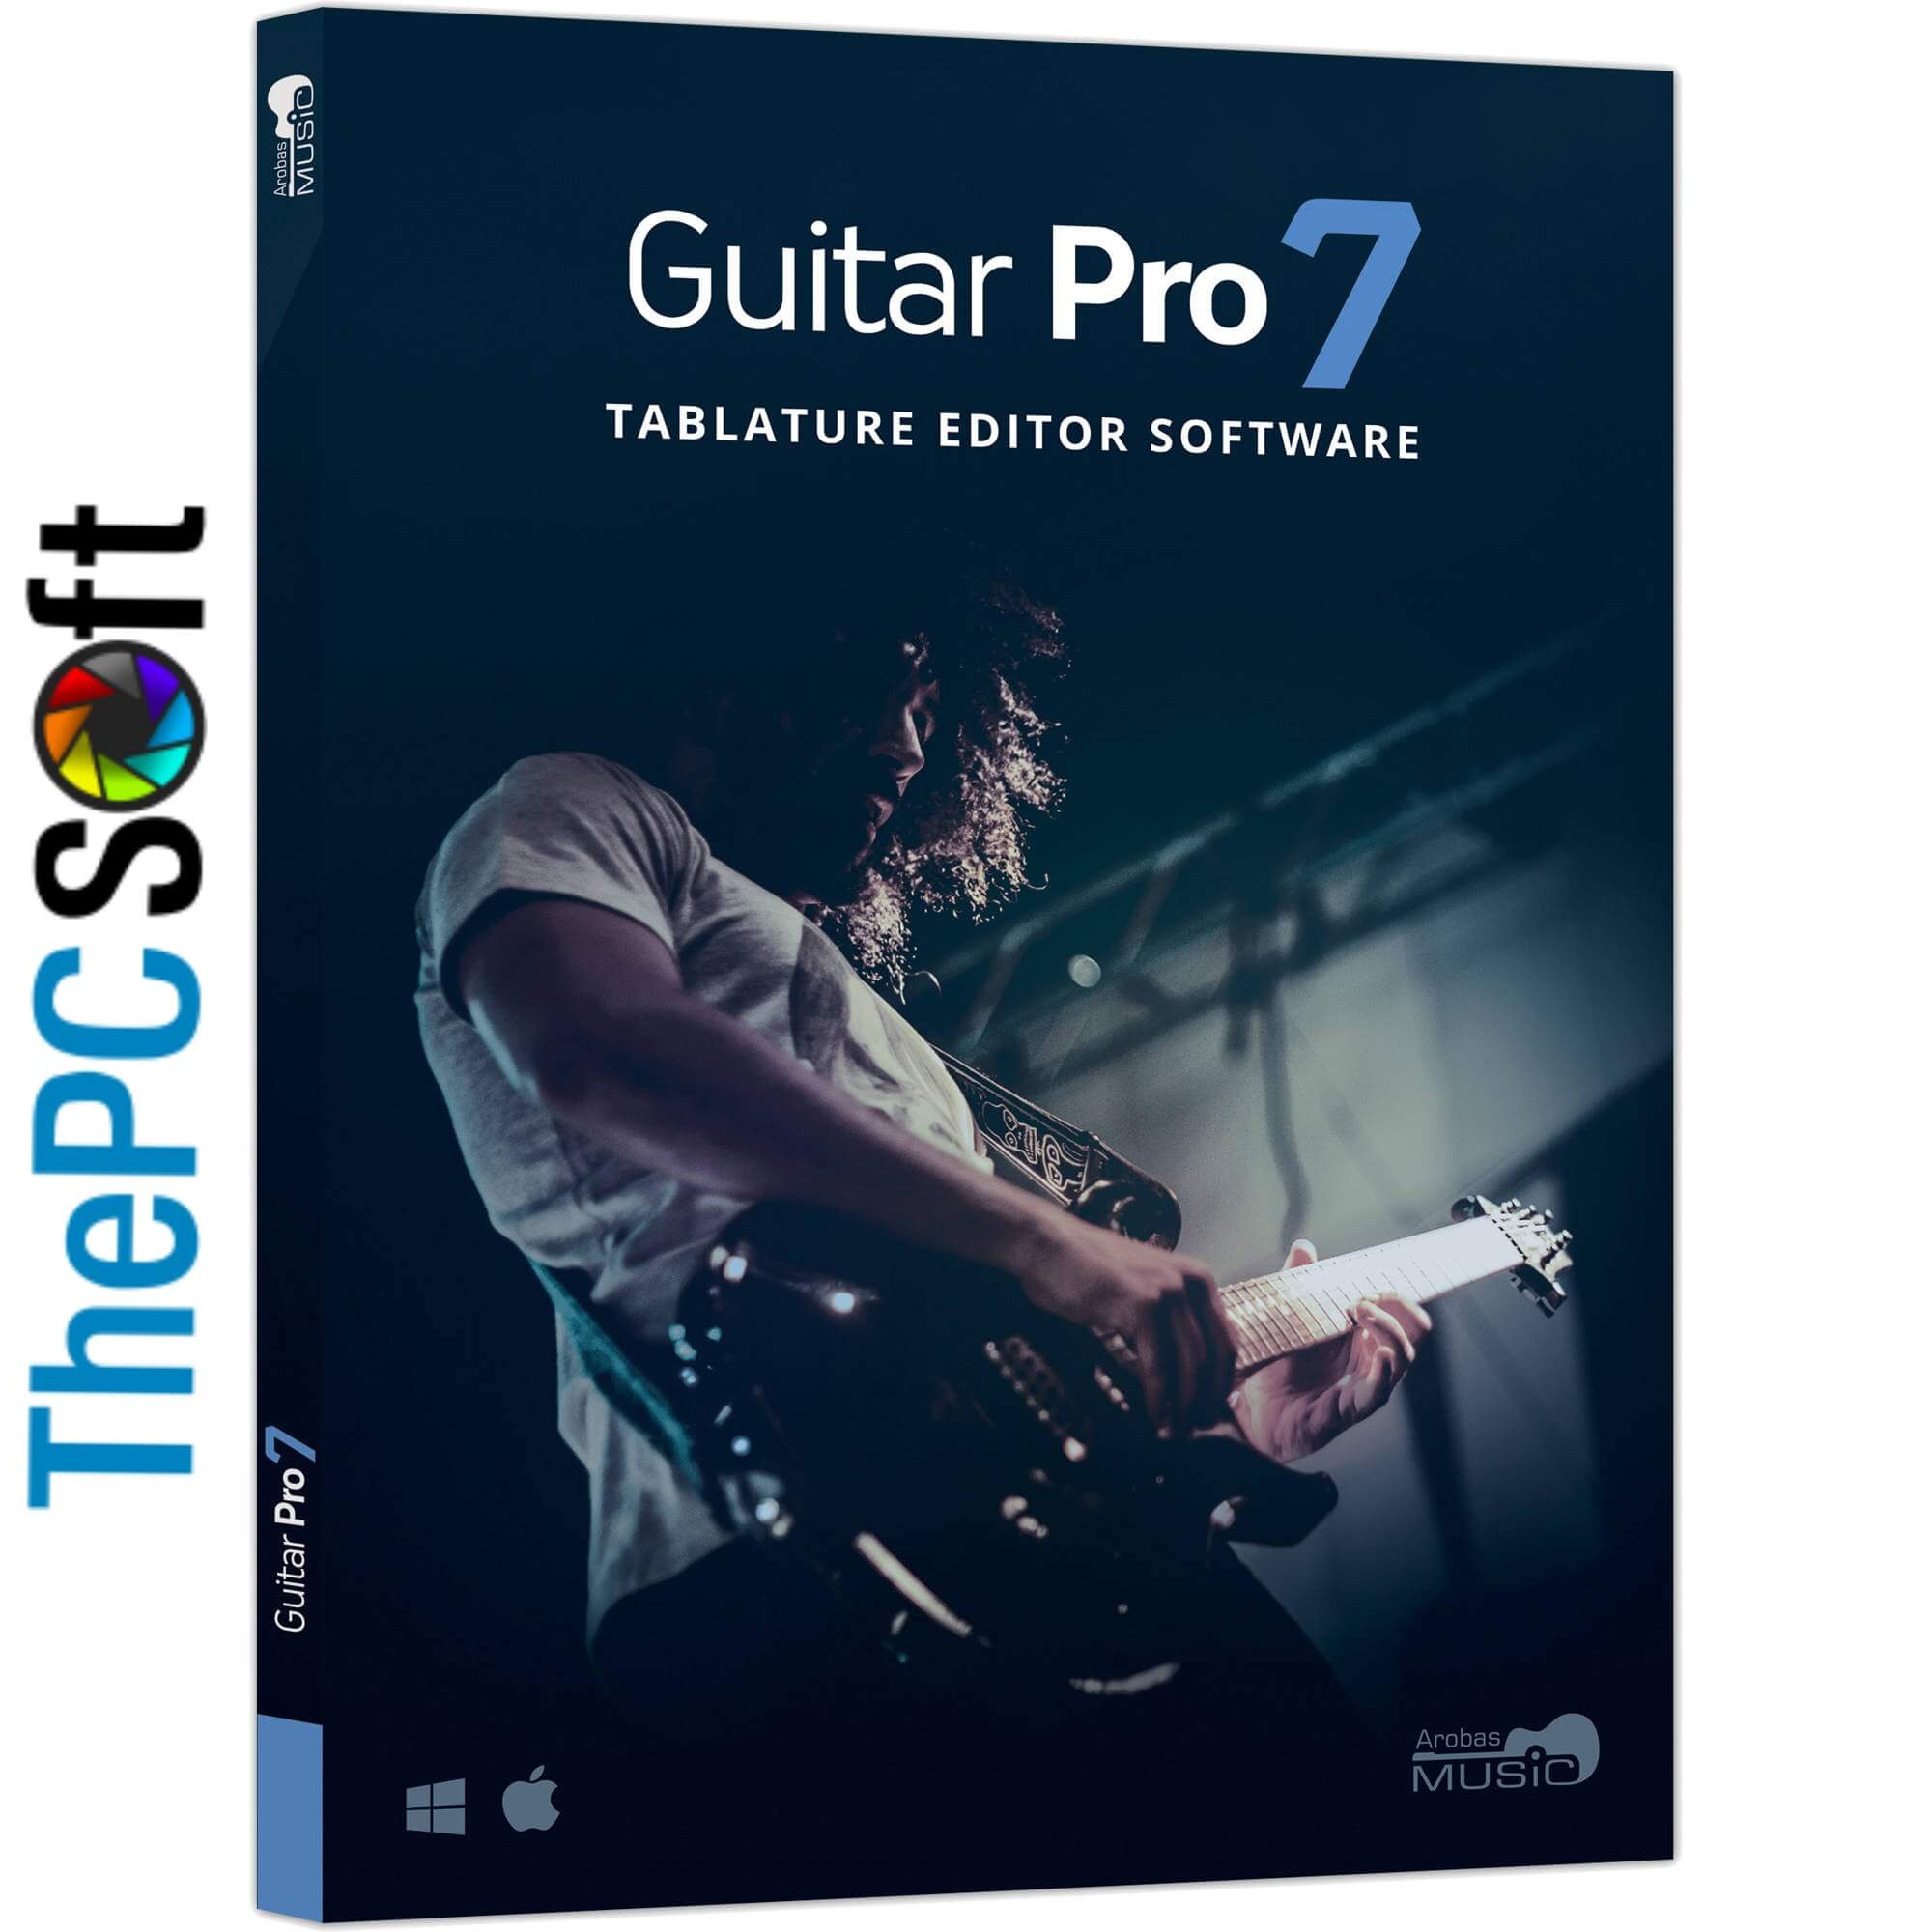 Guitar Pro crack free download